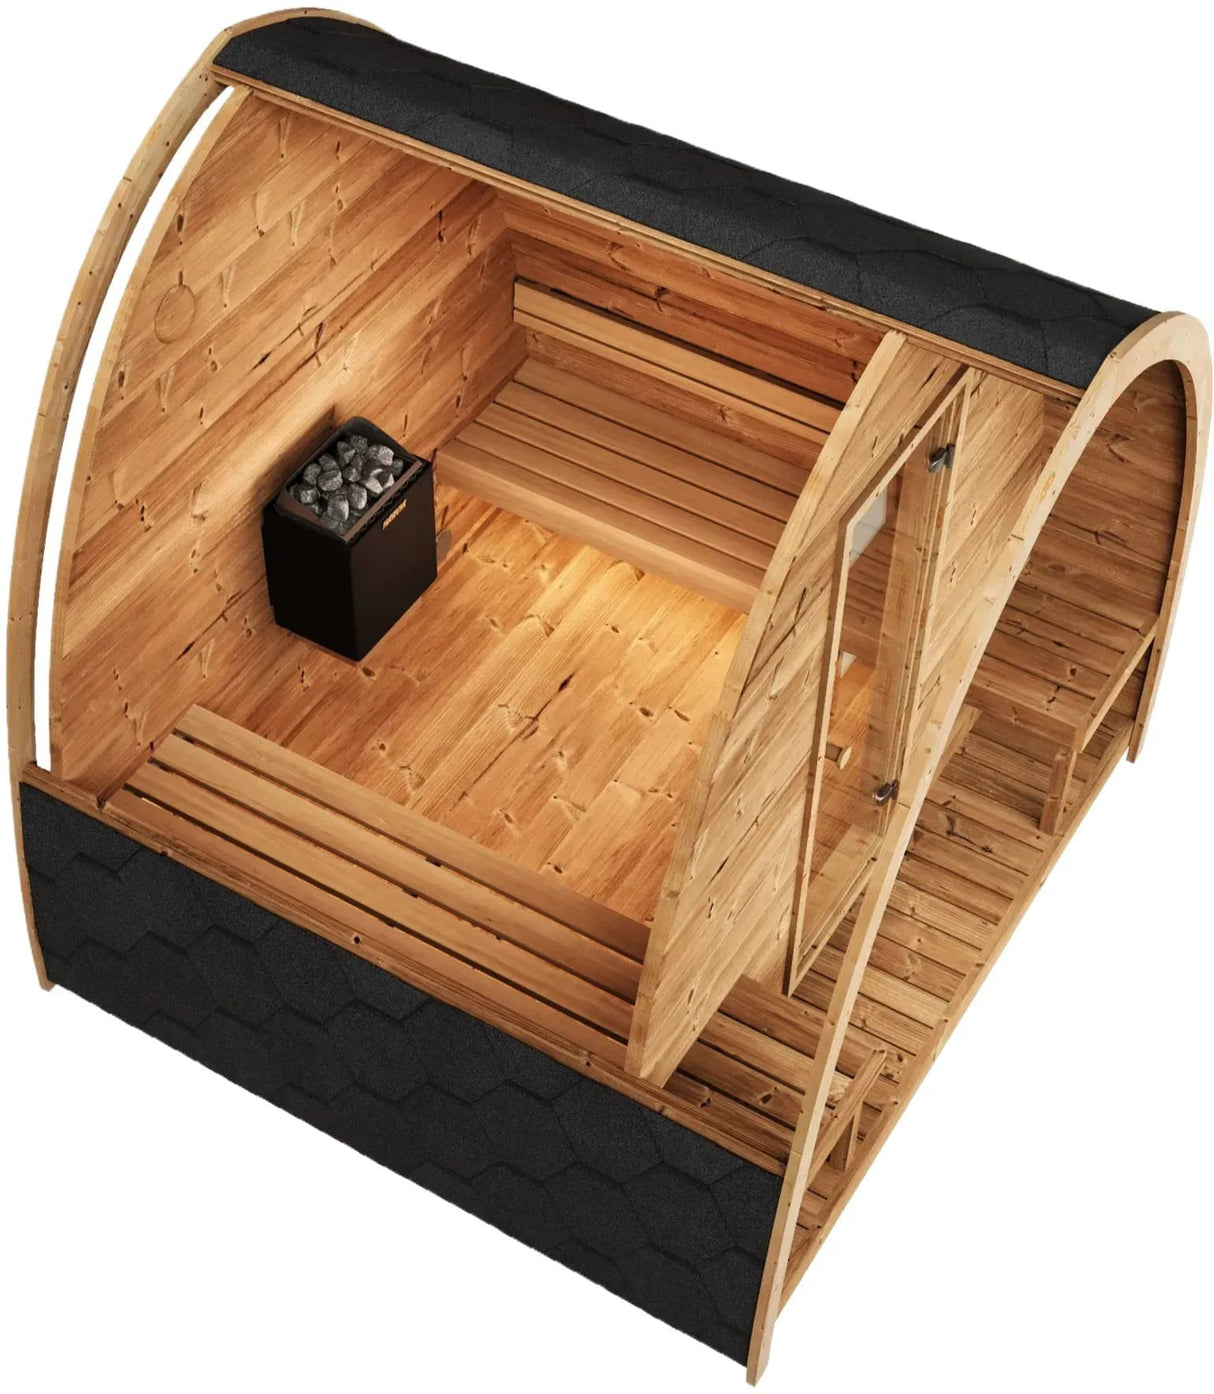 ZiahCare's SaunaLife Model G3 Outdoor Home Sauna Kit Mockup Image 3